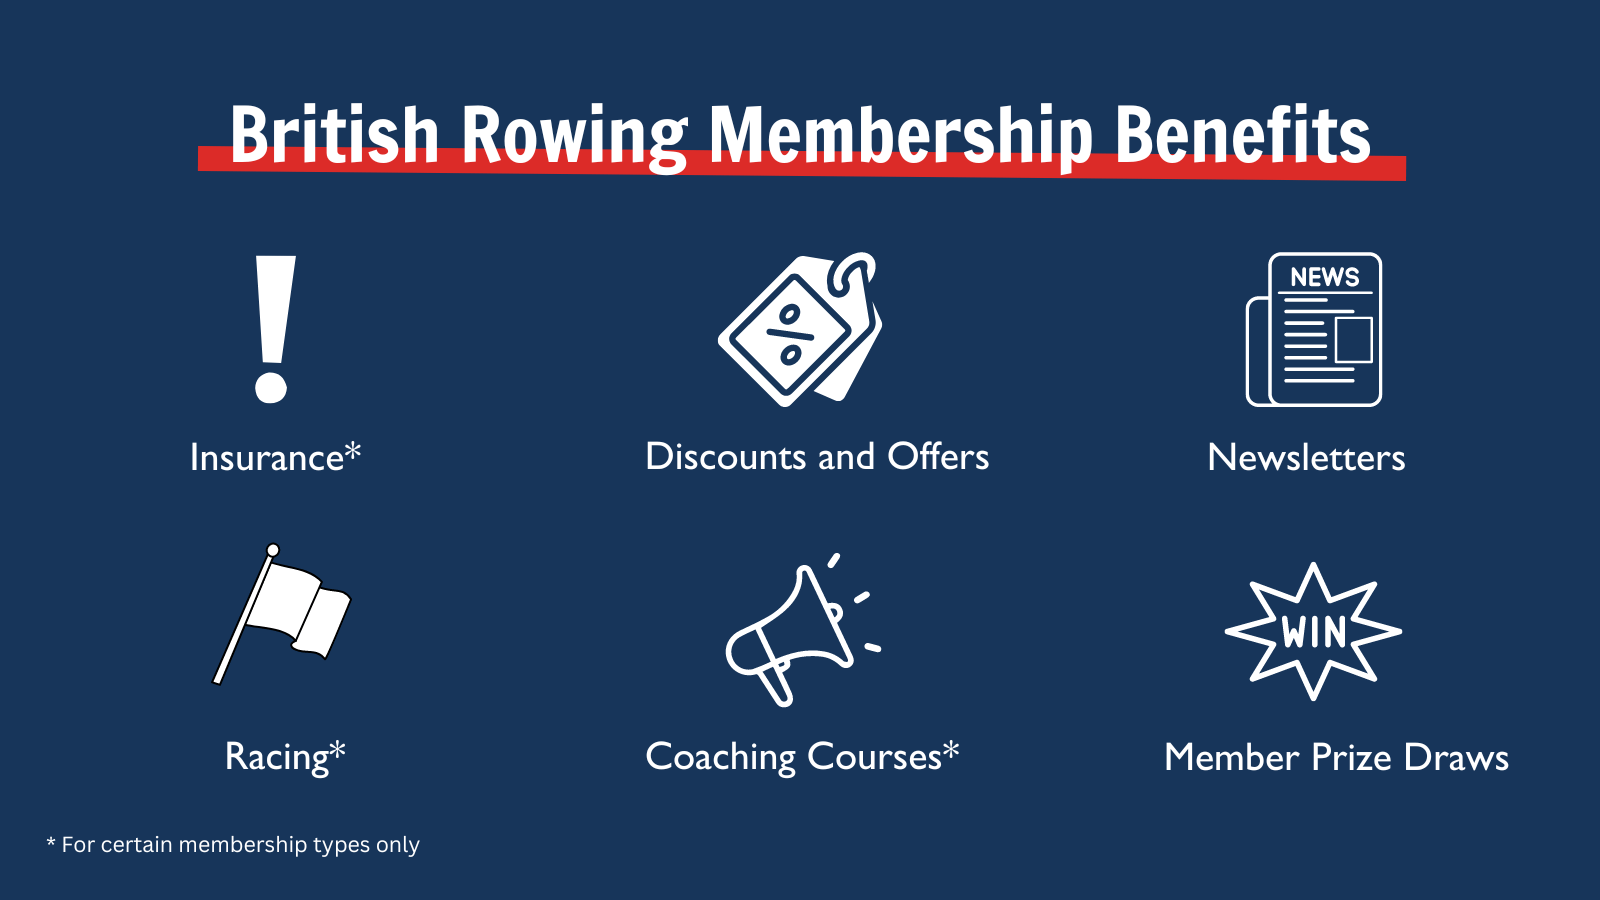 Summary of British Rowing membership benefits